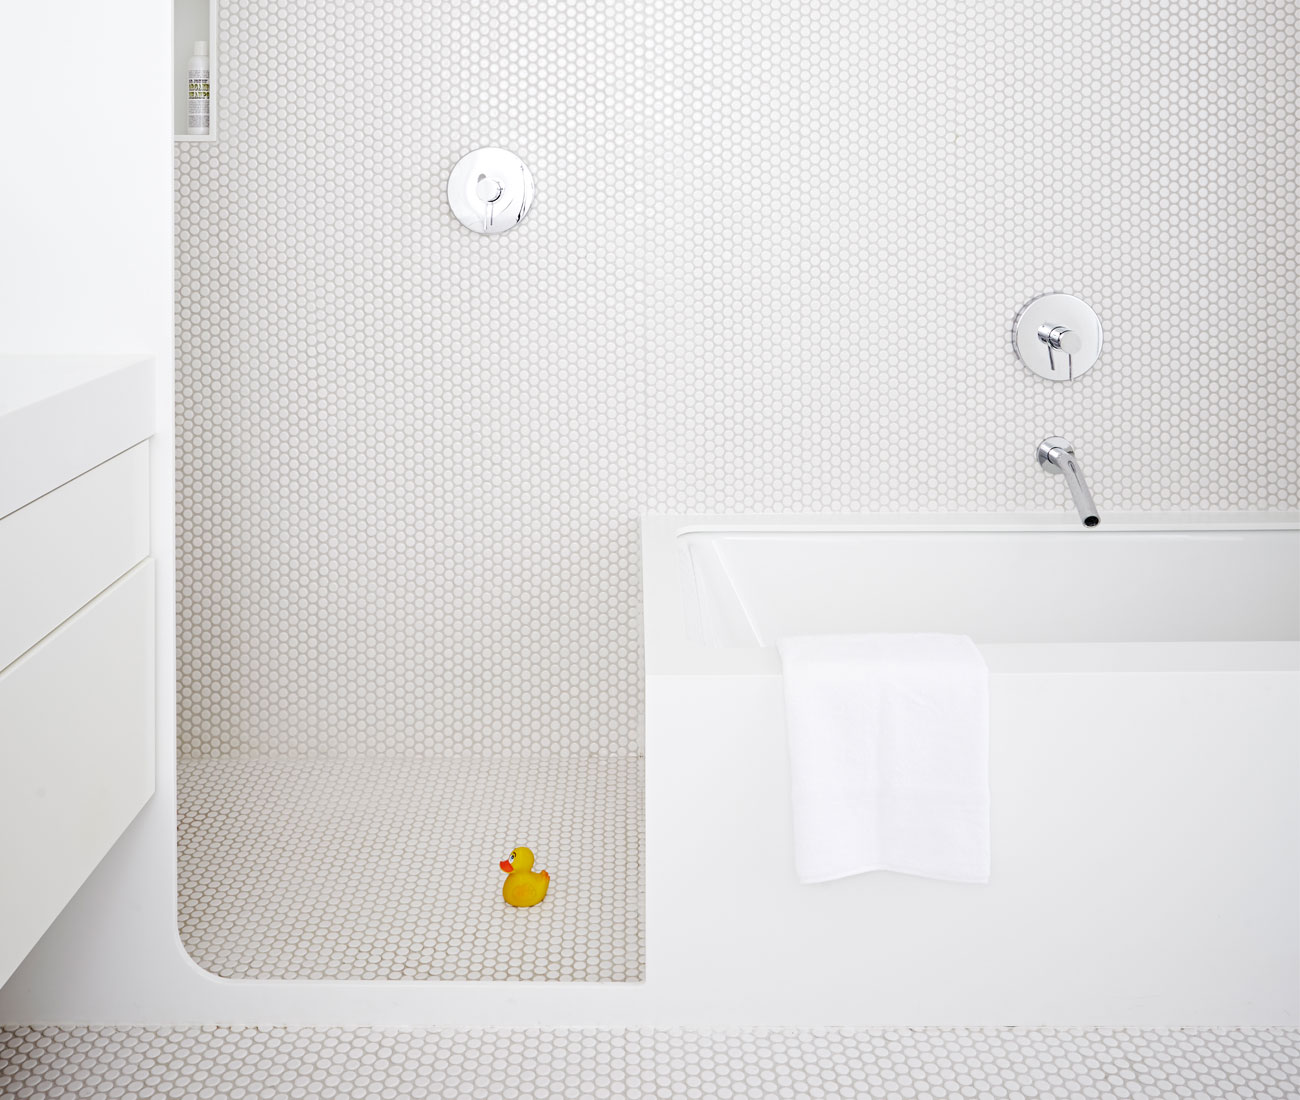 boychuk fuller bathroom design 2019 designlines magazine toronto penny round tiles